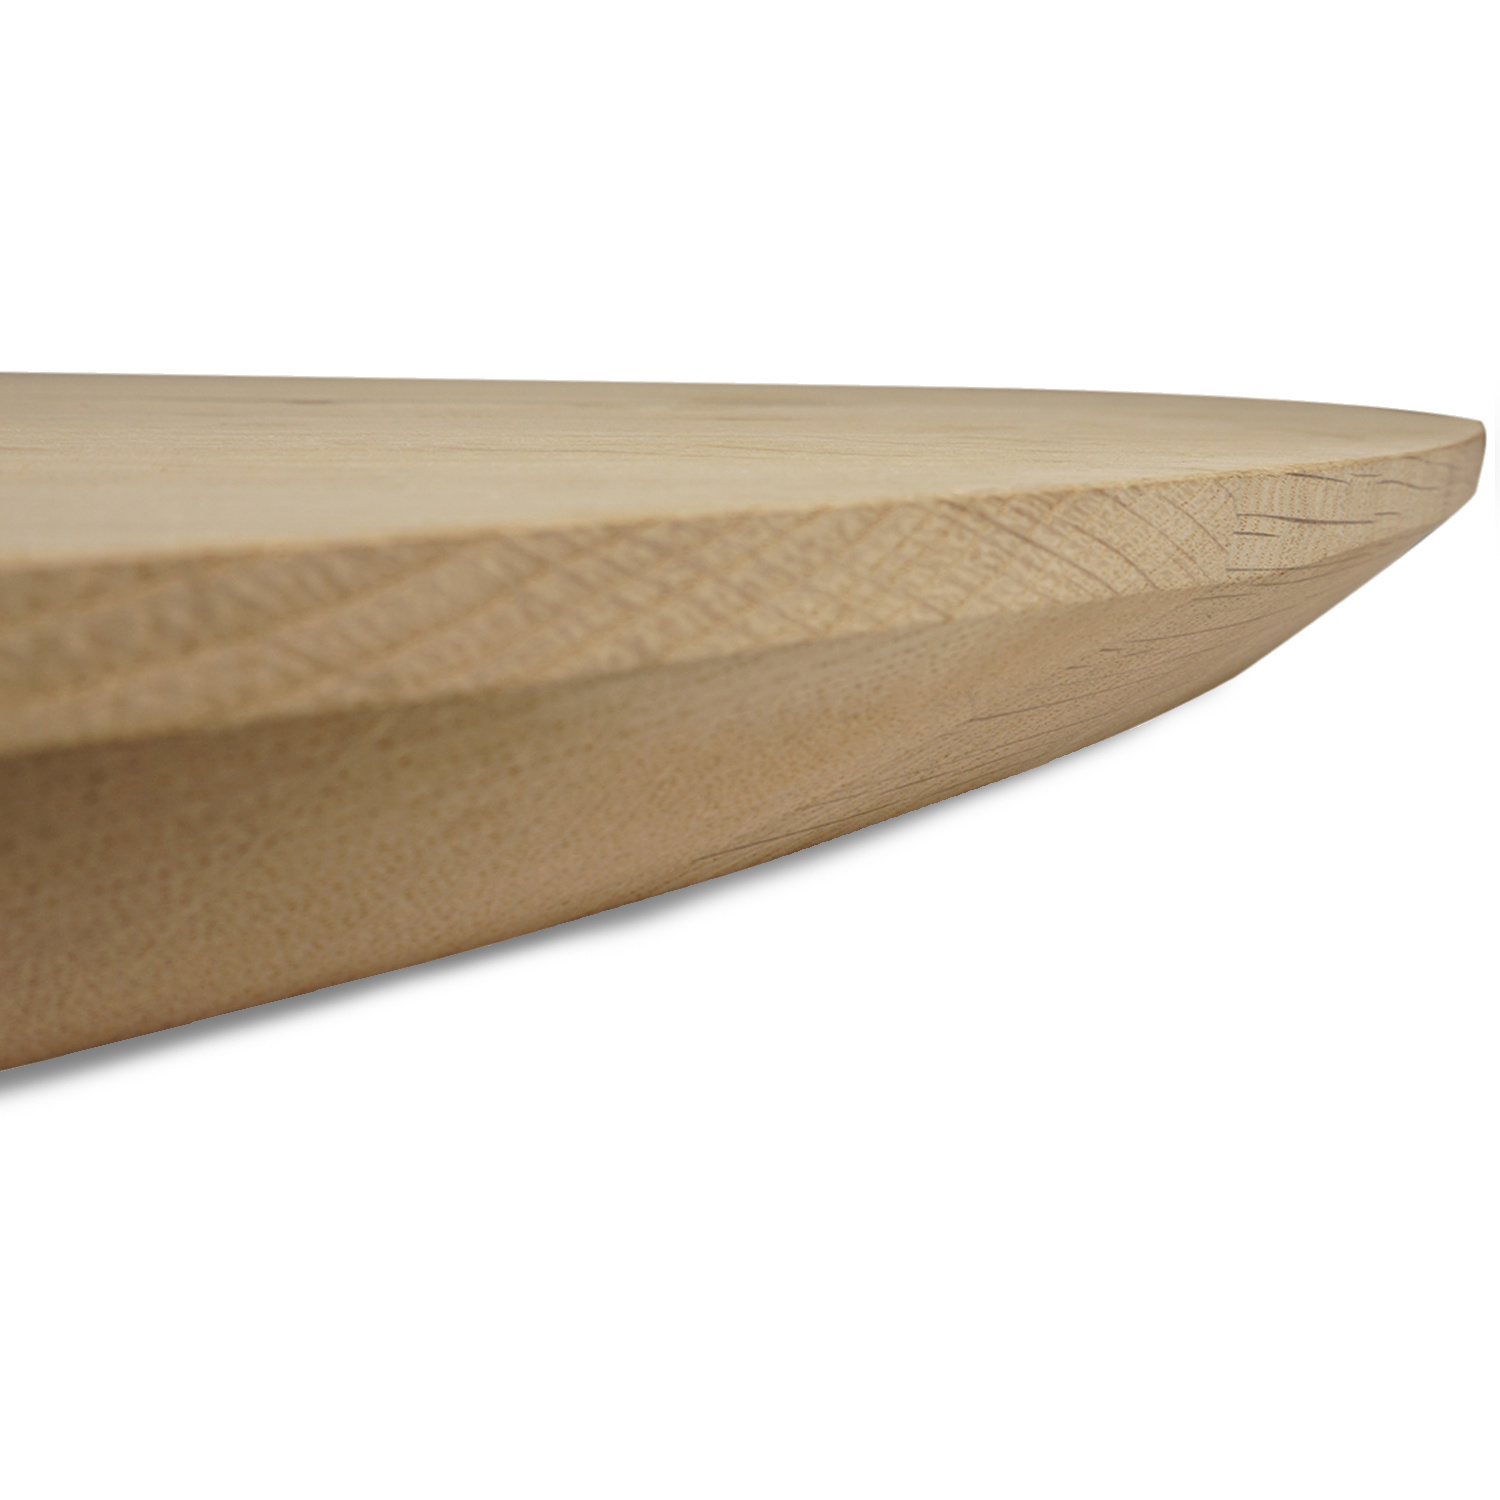  Deens ovaal eiken tafelblad - 2,7 cm dik (1-laag) - Diverse afmetingen - foutvrij Europees eikenhout - met brede lamellen (circa 10-12 cm) - verlijmd kd 8-12%